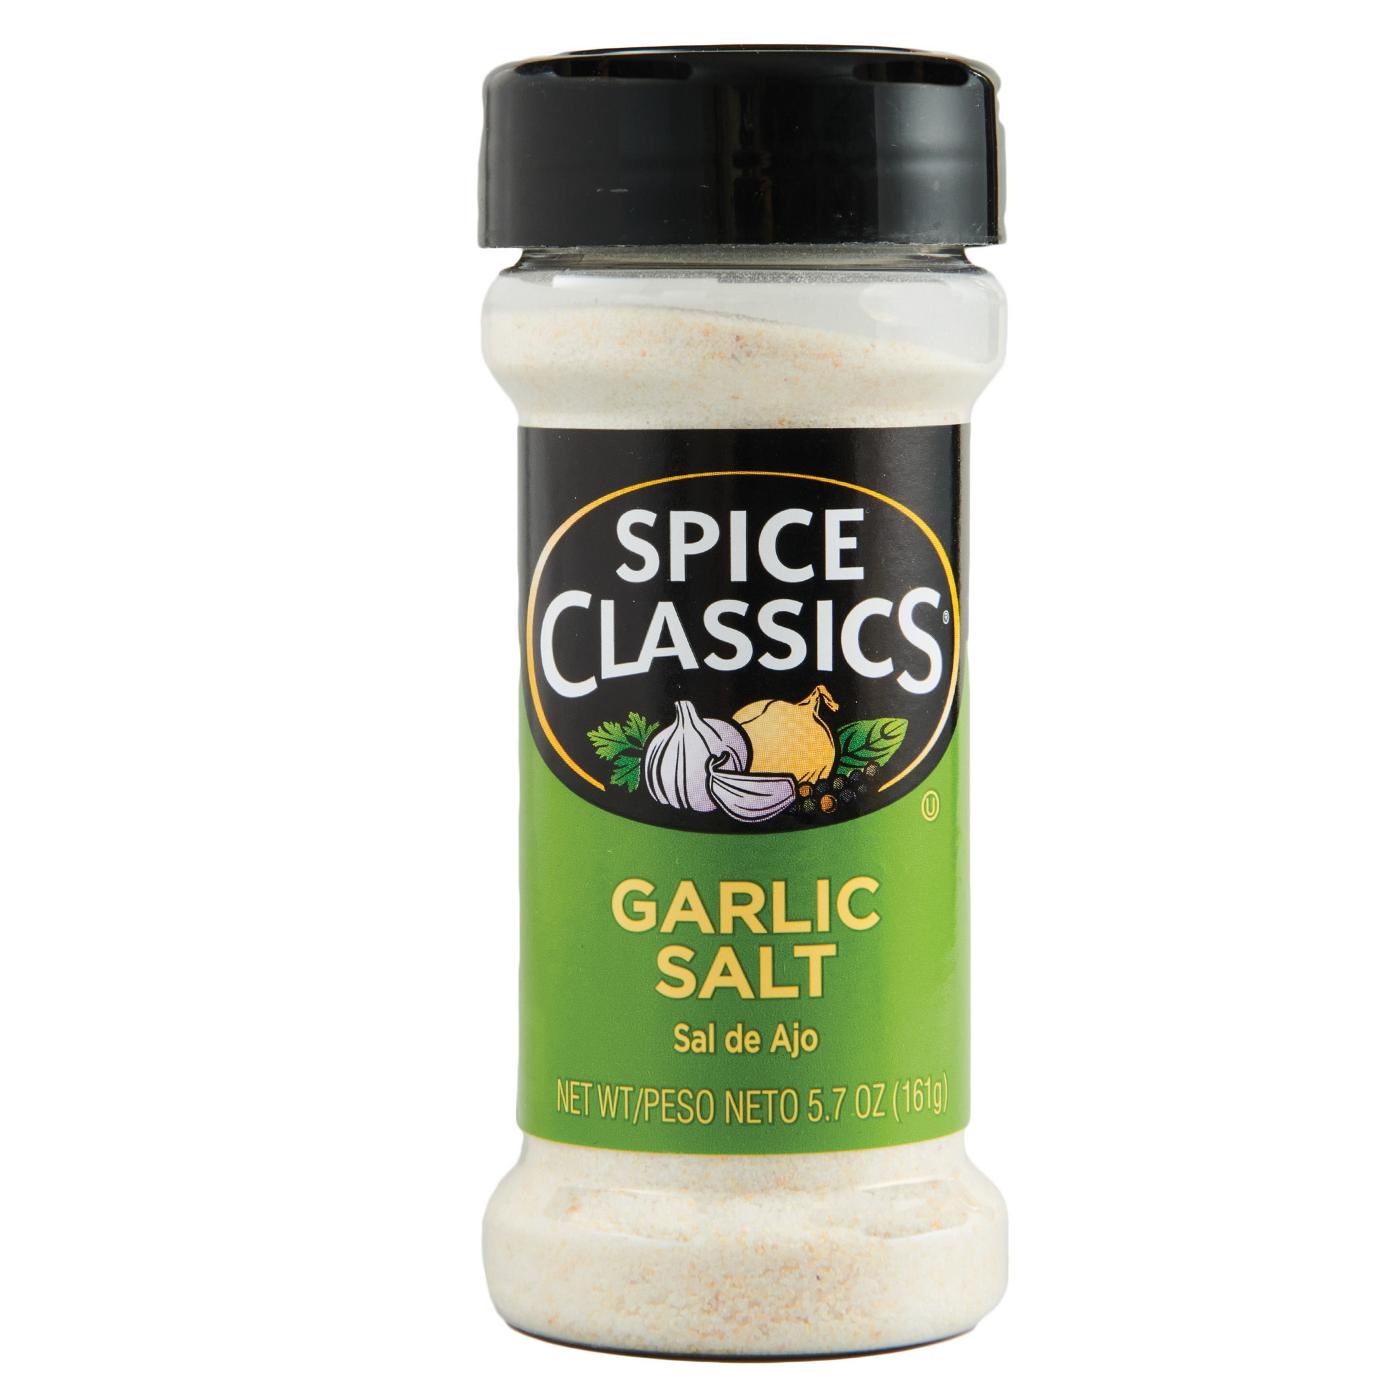 Spice Classics Garlic Salt; image 1 of 3